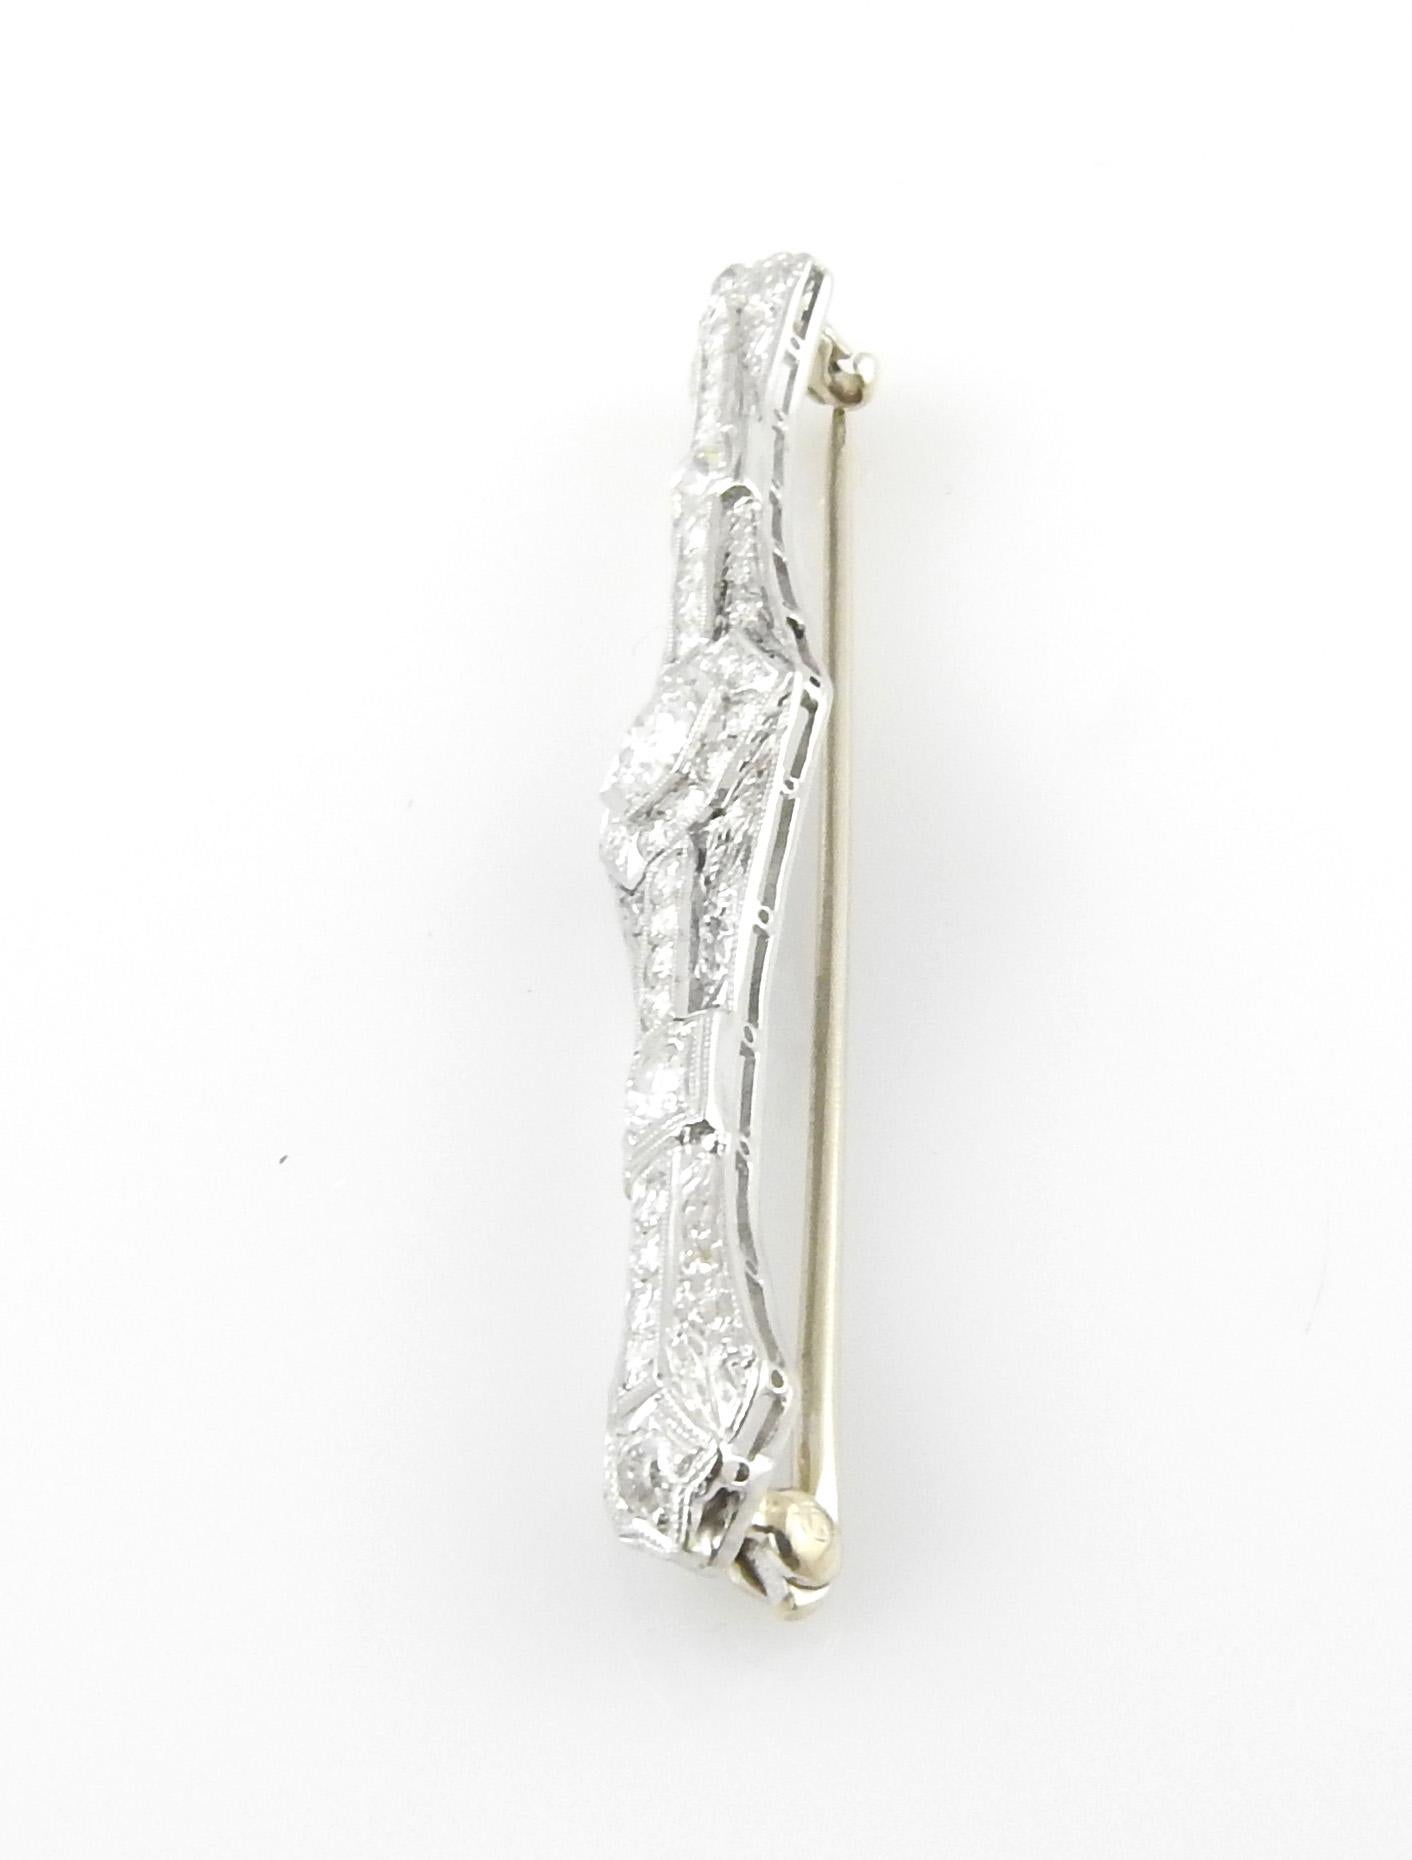 Brilliant Cut 14 Karat White Gold and Diamond Bar Pin #5343 For Sale